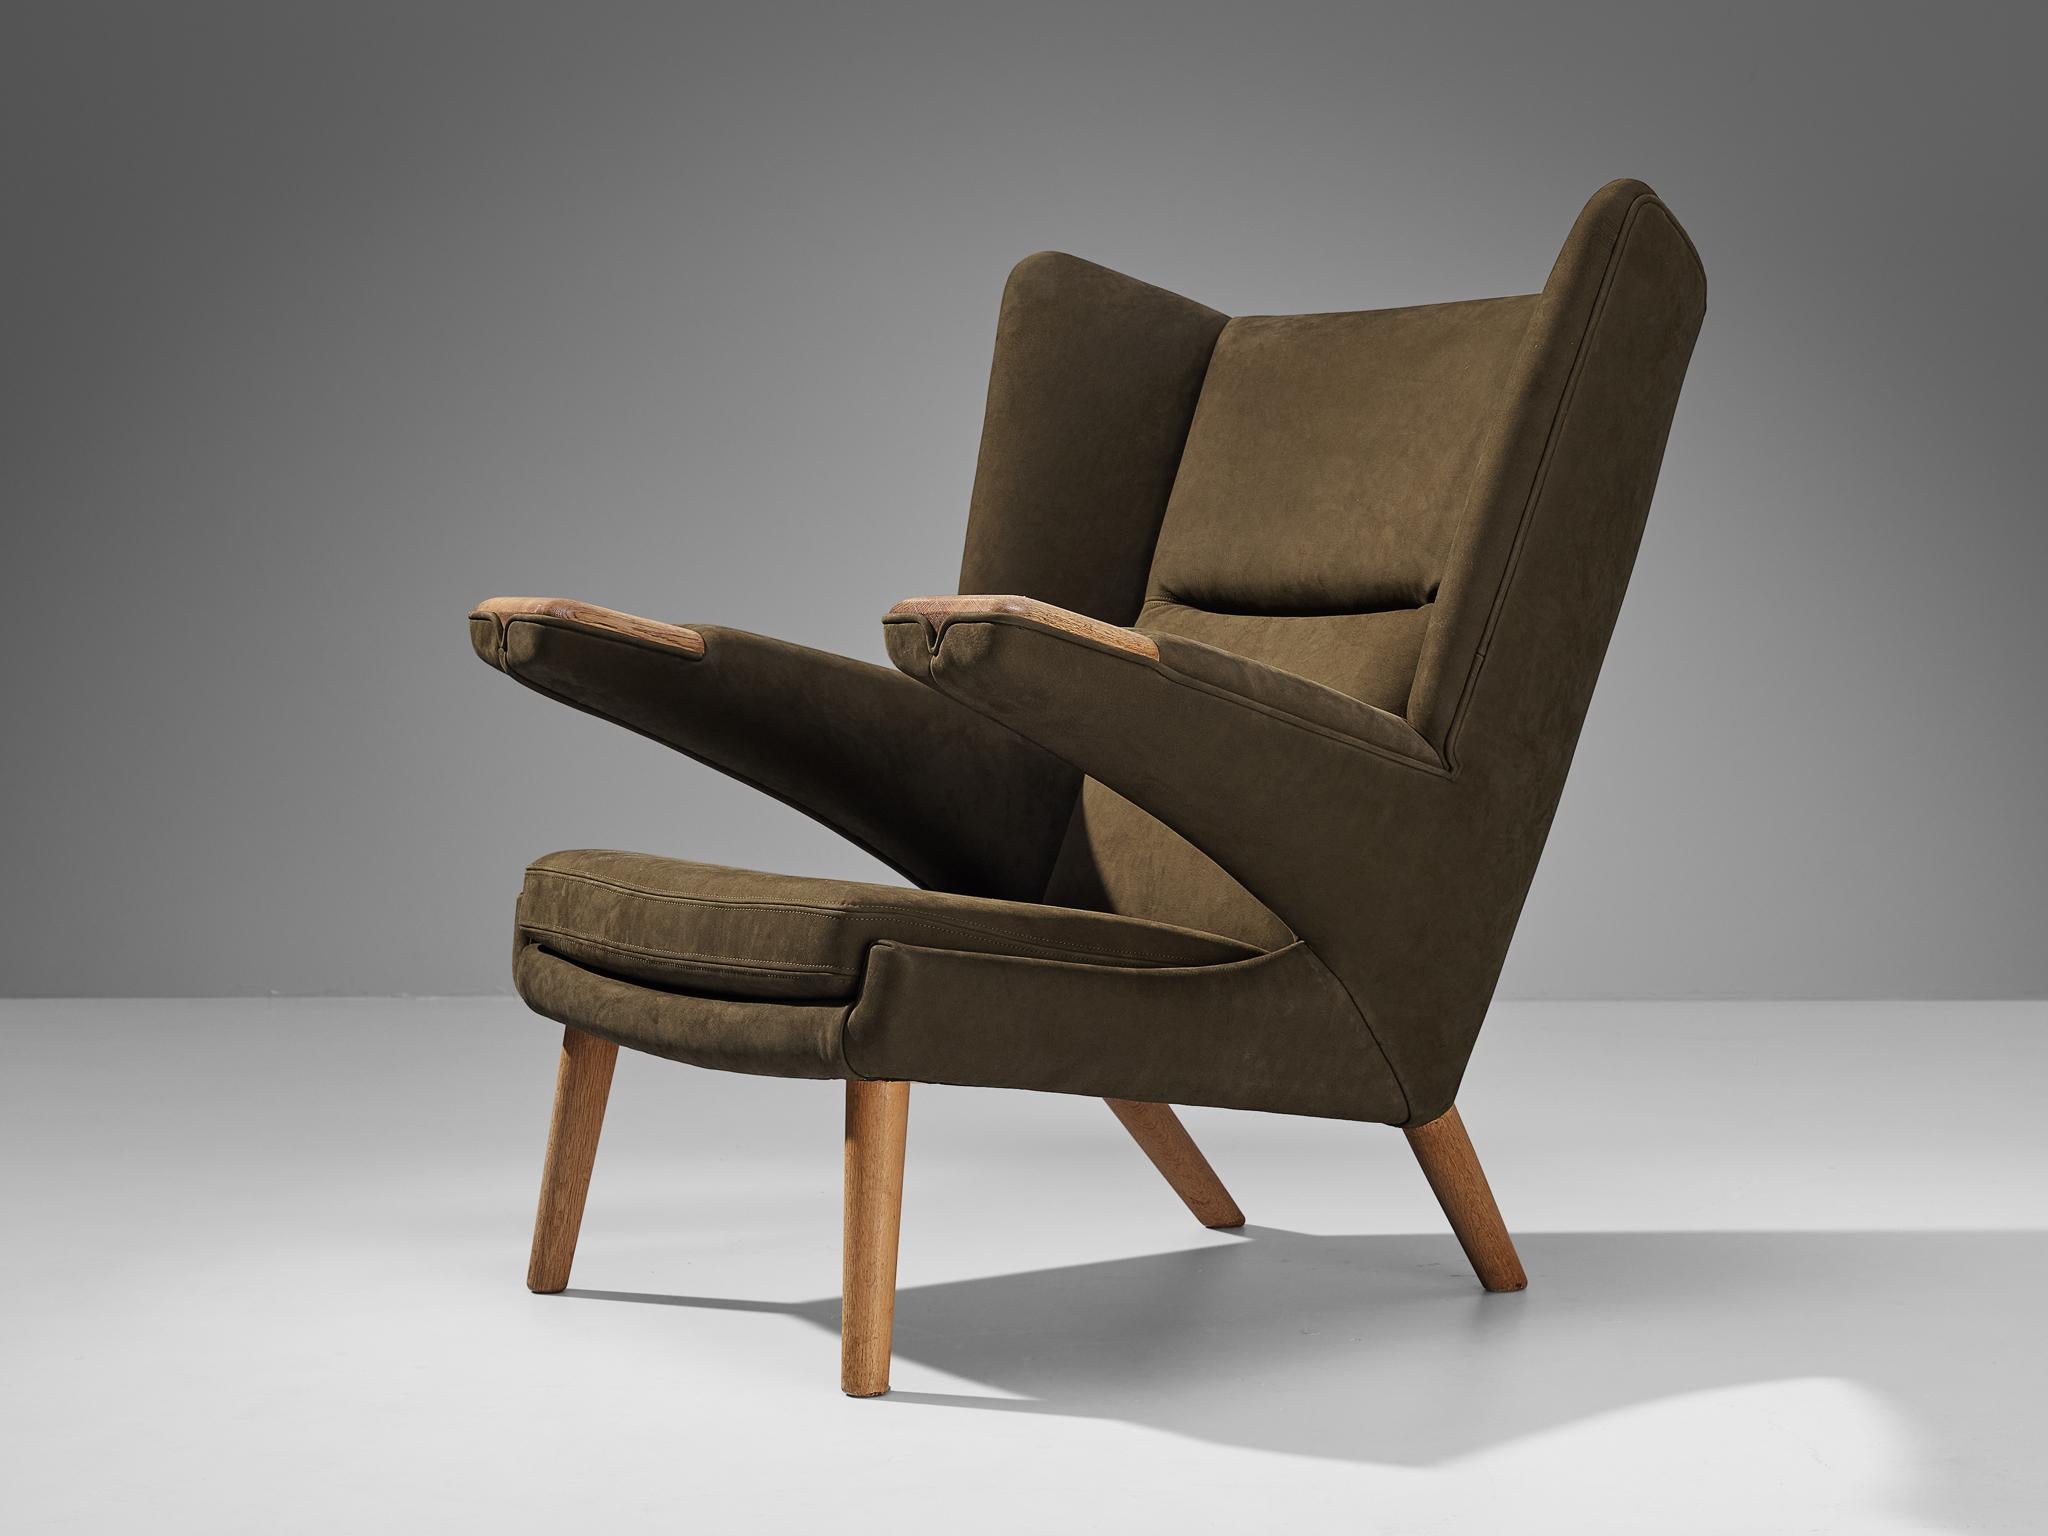 Hans J. Wegner for A.P. Stolen, ‘New Papa Bear’ lounge chair, model AP69, oak, reupholstered in Ohmann Colorado nubuck leather, Denmark, 1968/69 

This Danish armchair named ‘New Papa Bear’, model AP69, is a design by Hans J. Wegner for AP Stolen